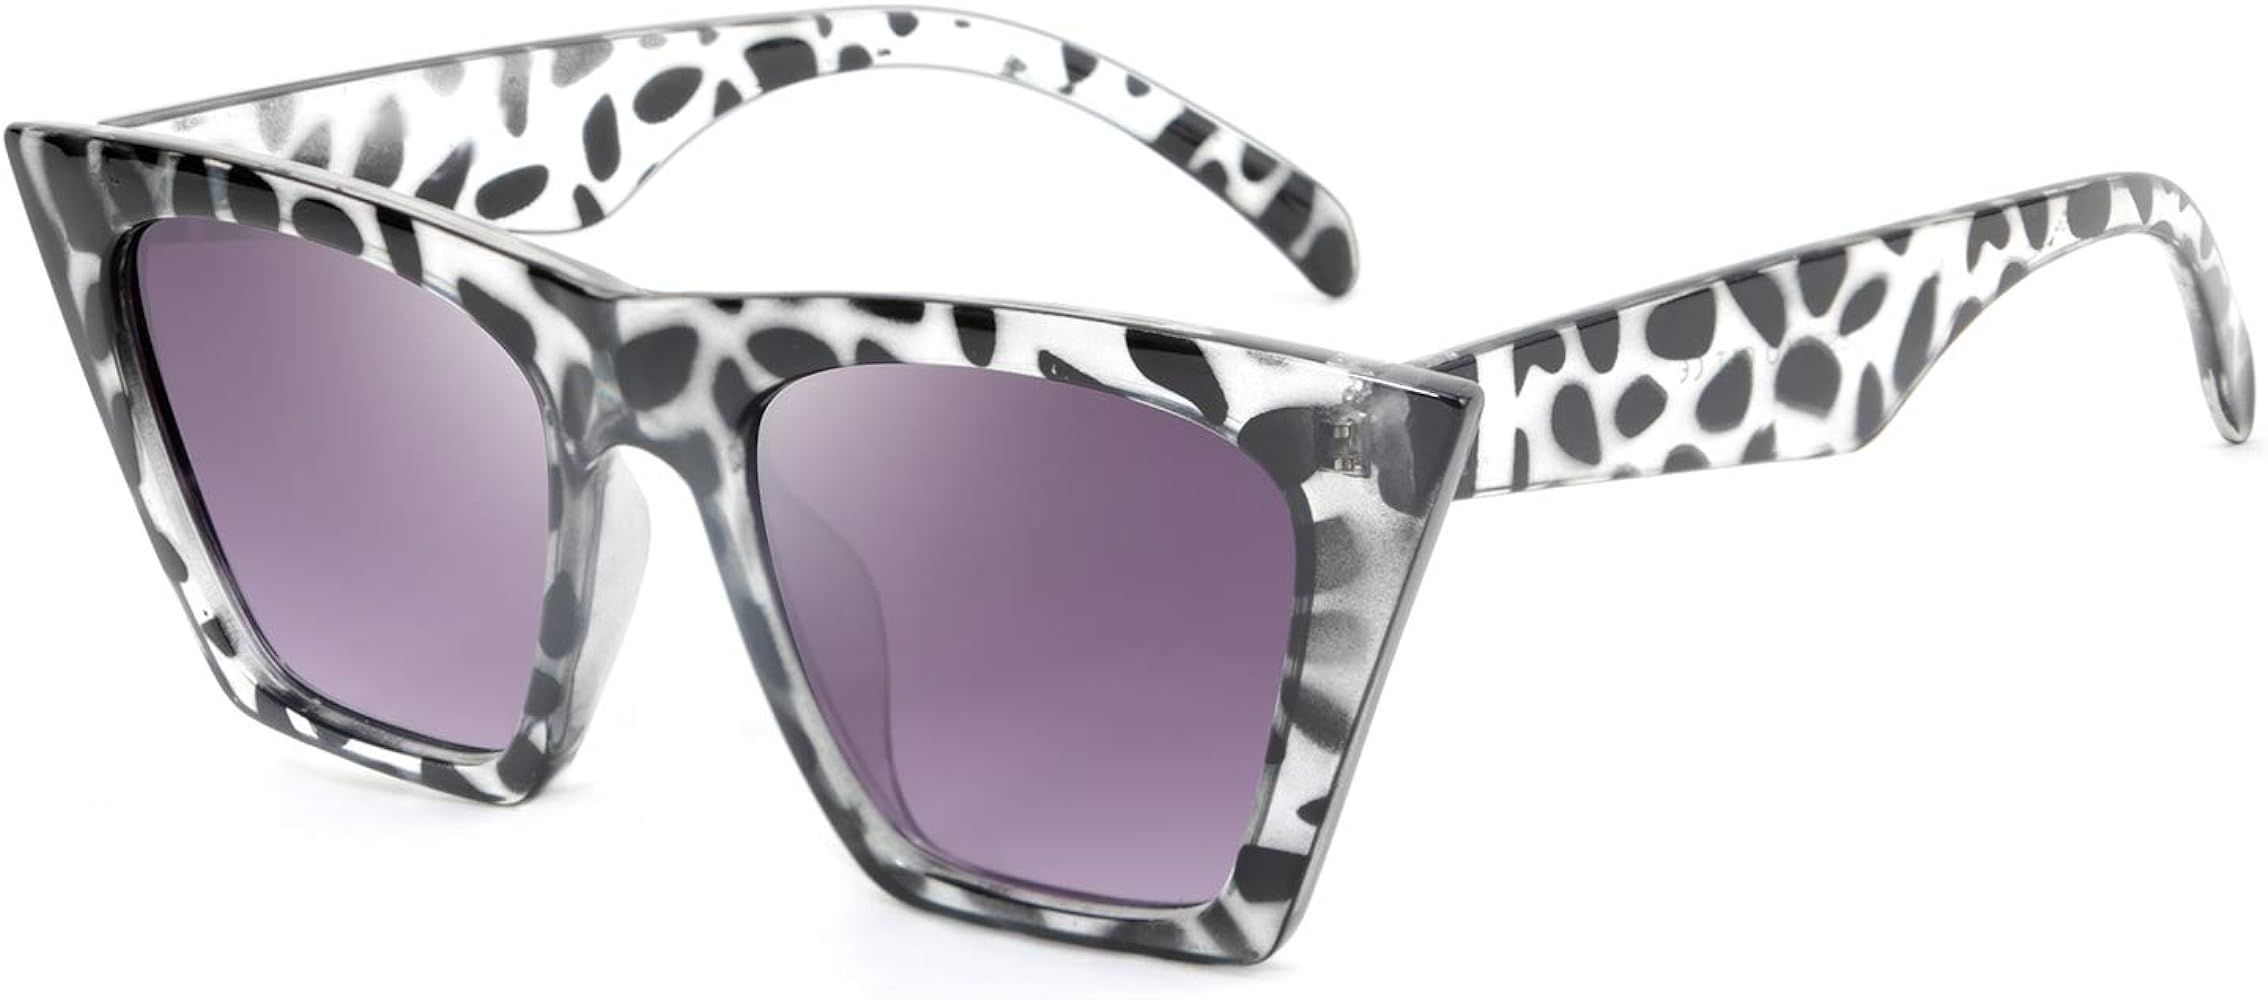 FEISEDY Vintage Square Cat Eye Sunglasses Women Trendy Cateye Sunglasses B2473 | Amazon (US)